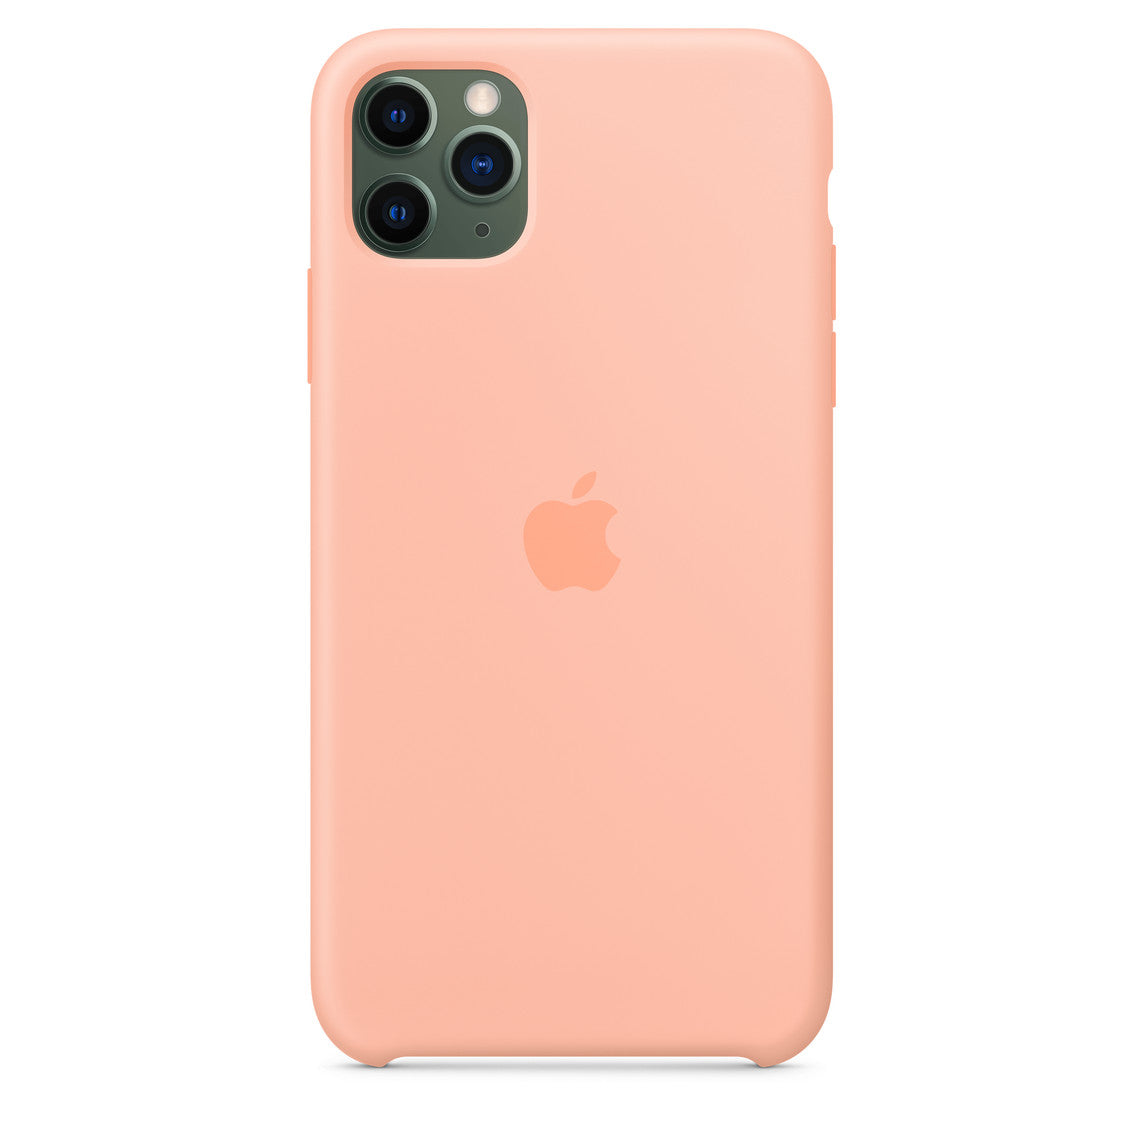 Apple iPhone 11 Pro Max 512GB Nachtgrün Fair Ohne Vertrag mit Apple iPhone 11 Pro Max Silikonhülle – Grapefruit